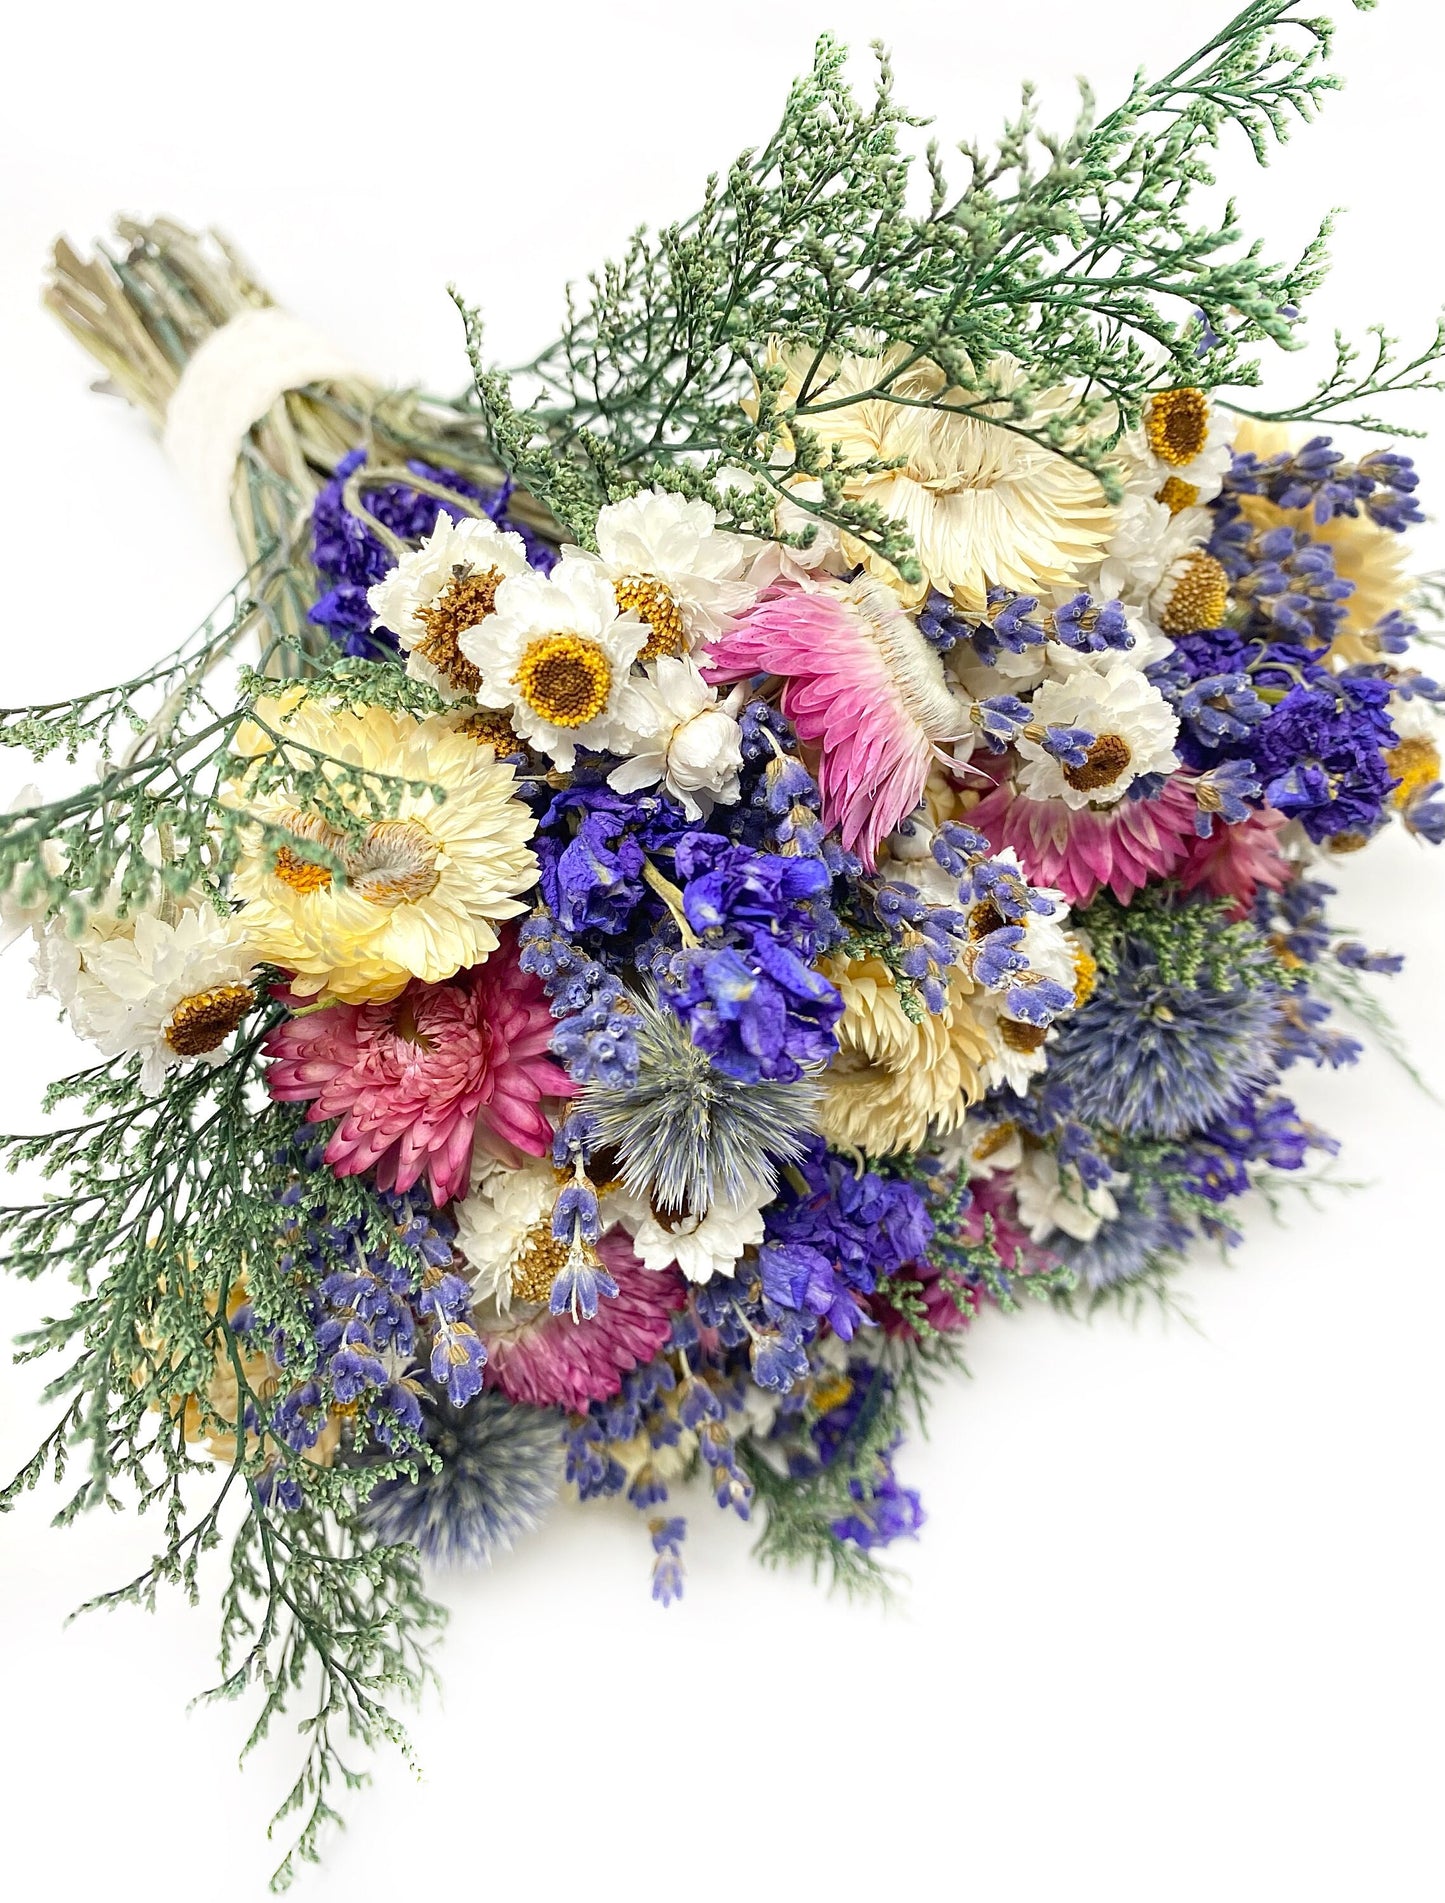 Wedding Bouquet, Dried Flowers, Strawflowers, Bridal, Lavender, Globe Thistles, Preserved Florals, Ammobium, Caspia